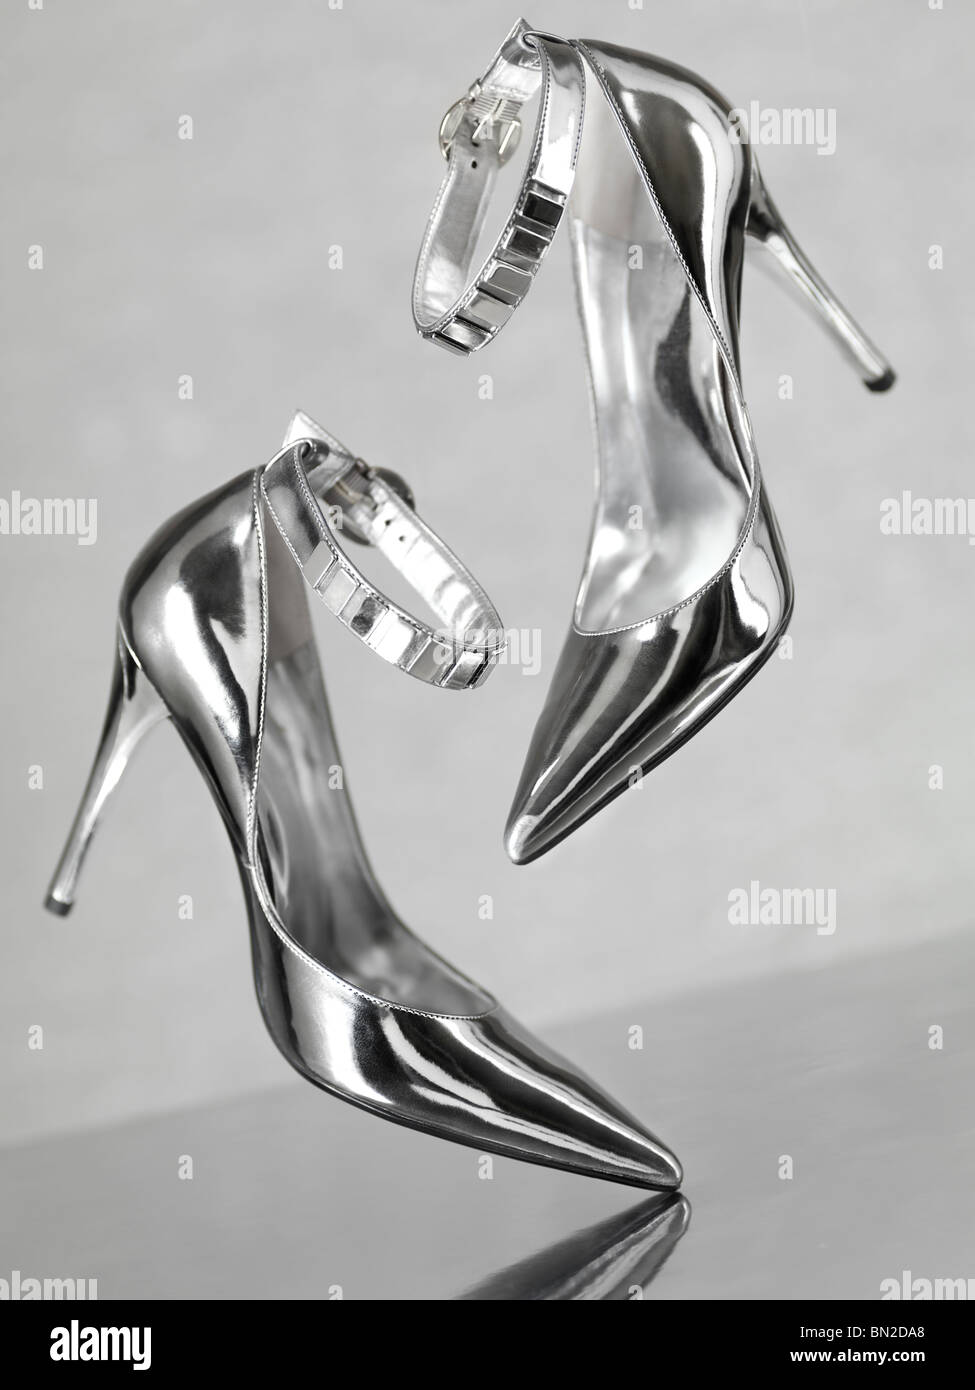 Stylish shiny silver stiletto high heel shoes falling on metal surface  Stock Photo - Alamy